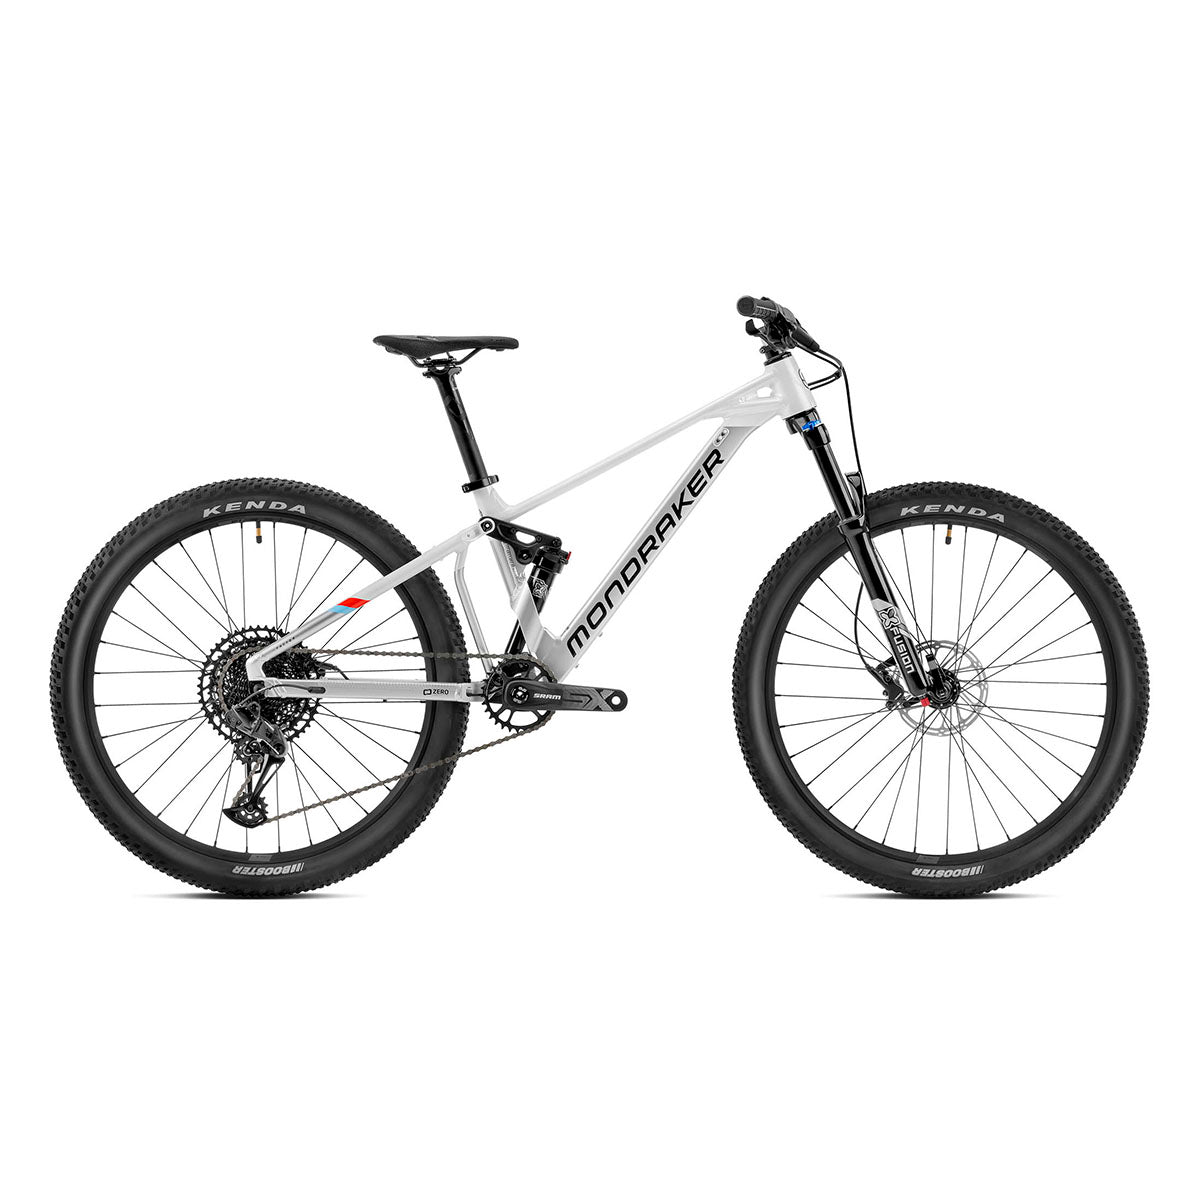 Mondraker - FACTOR 26 Bike - Silver/White (KIDS)